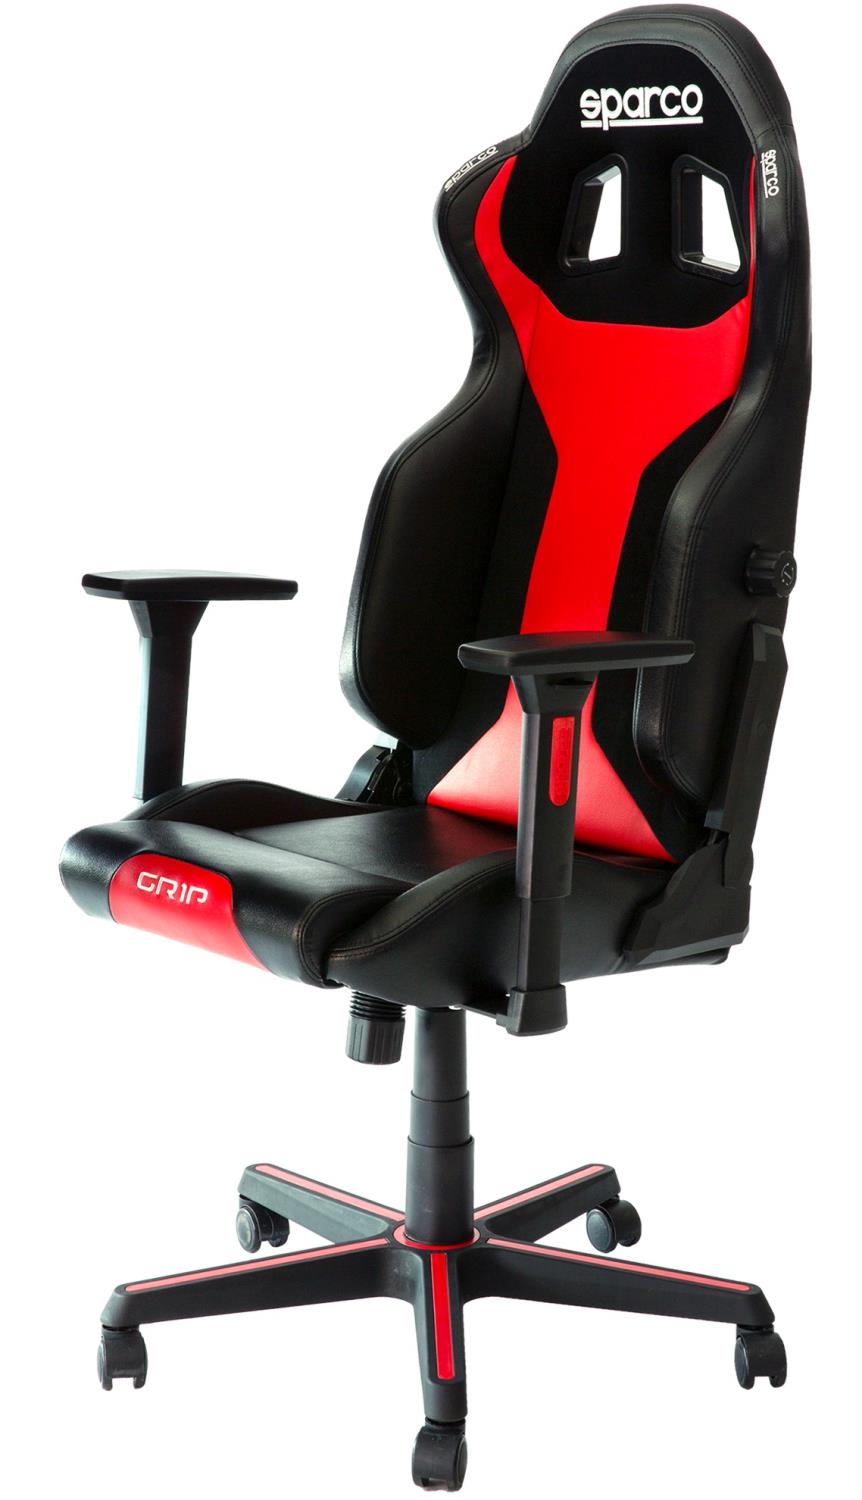 Sparco Grip Sky Series Gaming Chair